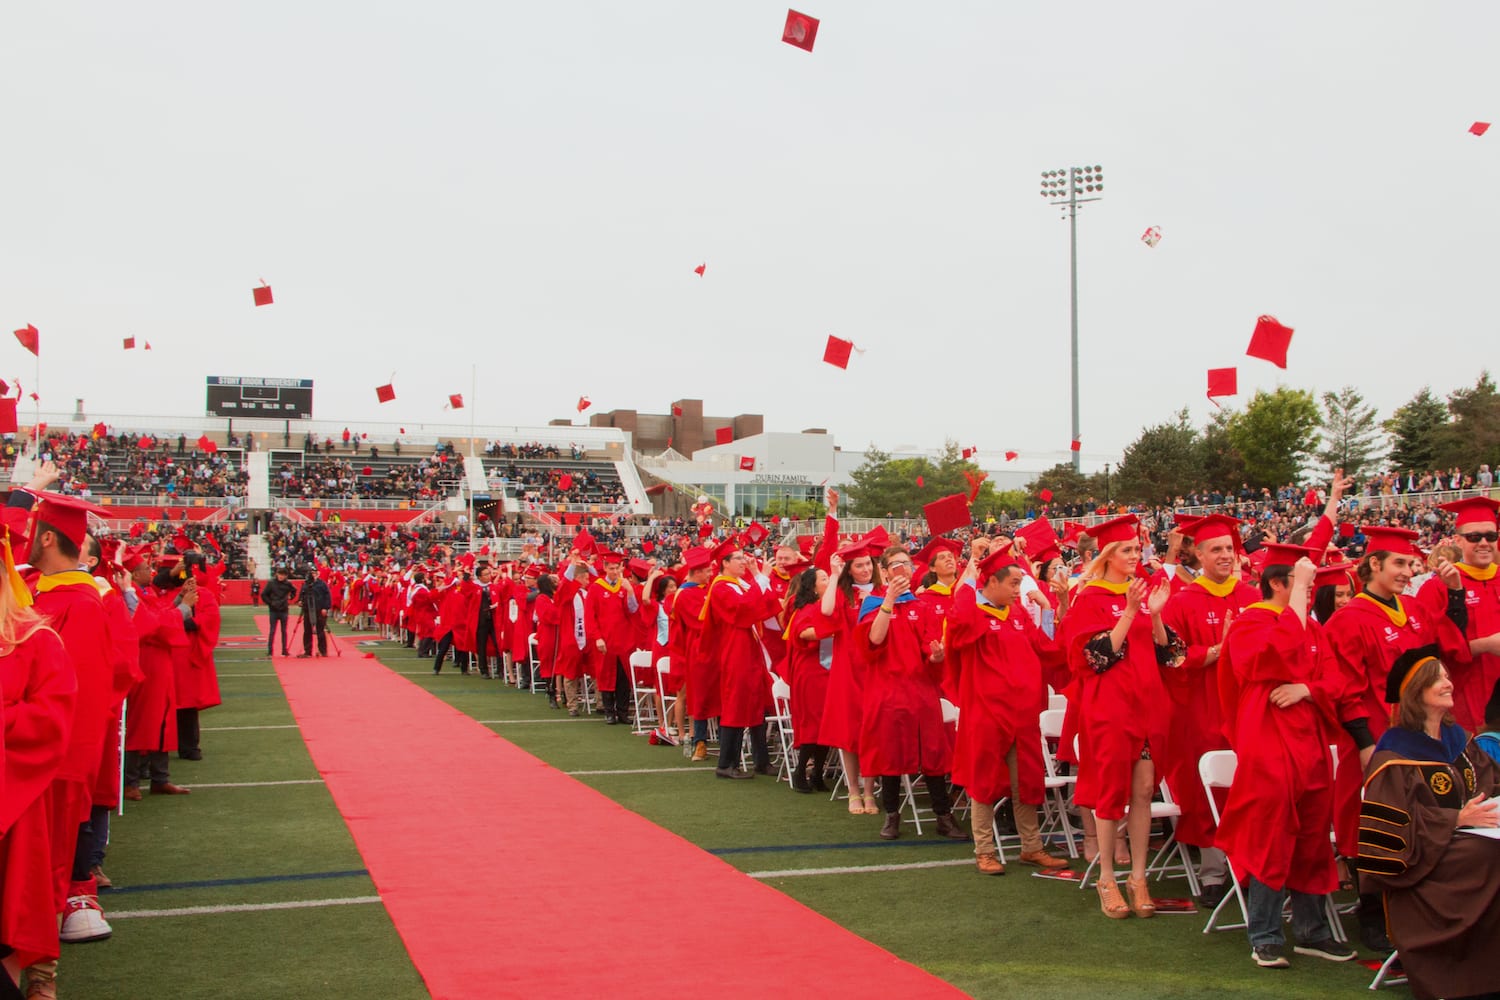 Stony Brook University graduates largest class in its history | TBR